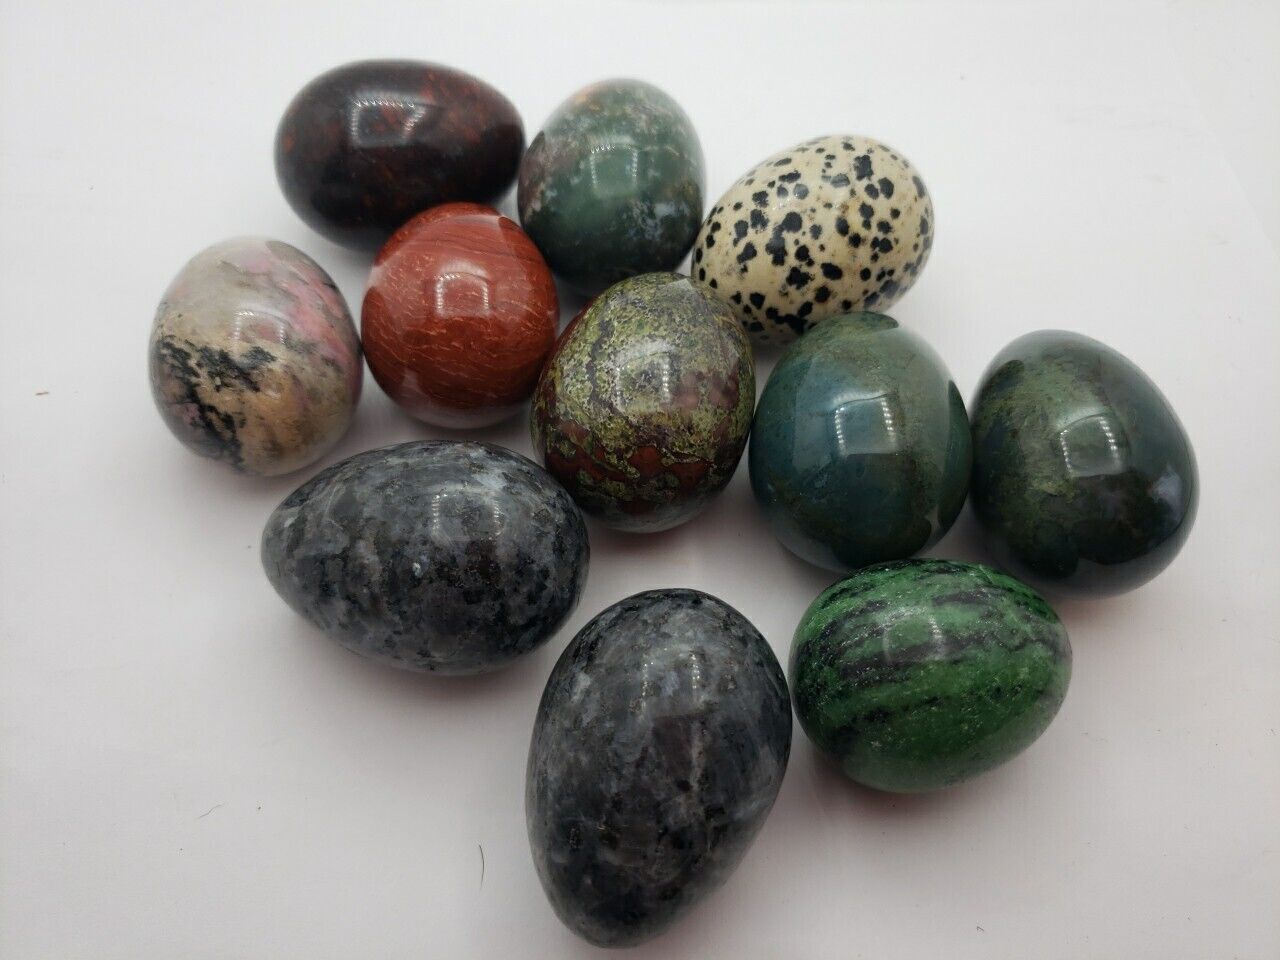 LOT Of 11 Natural Polished Stone Egg Shape 82g-108g Each 991g Total Gemstone 